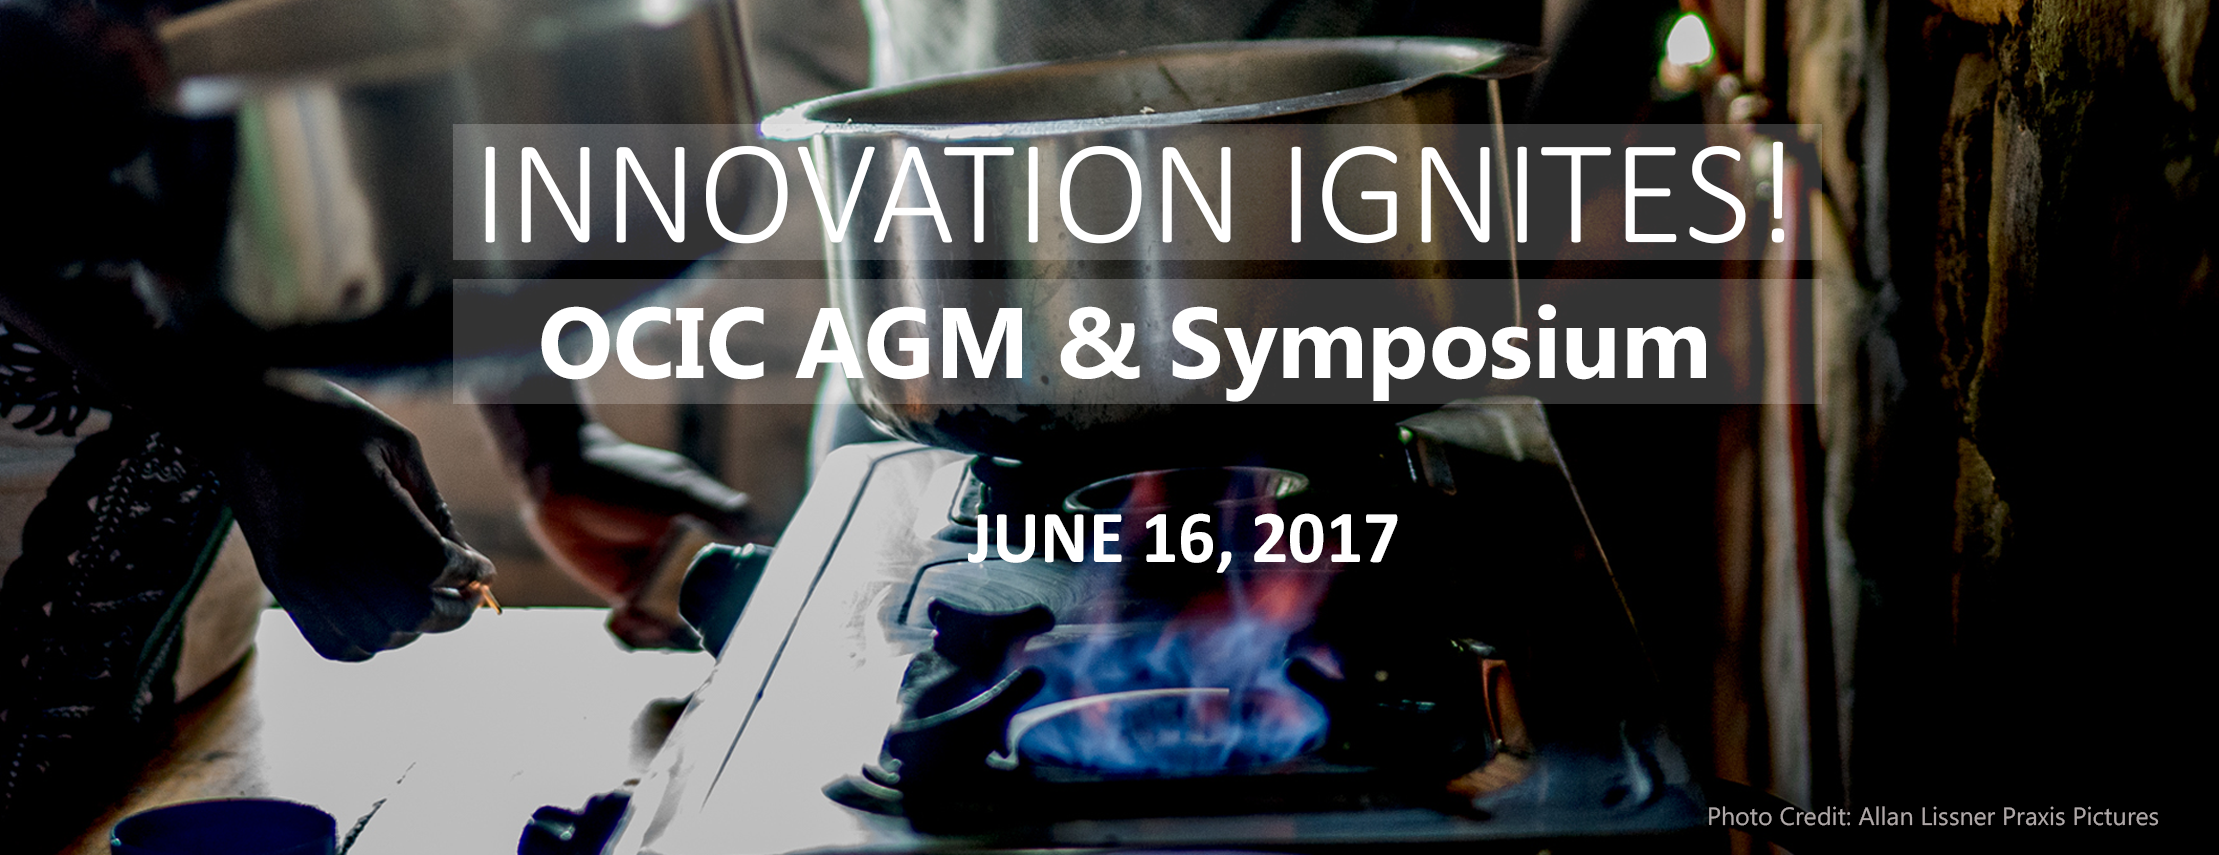 Innovation Ignites! OCIC AGM & Symposium 2017